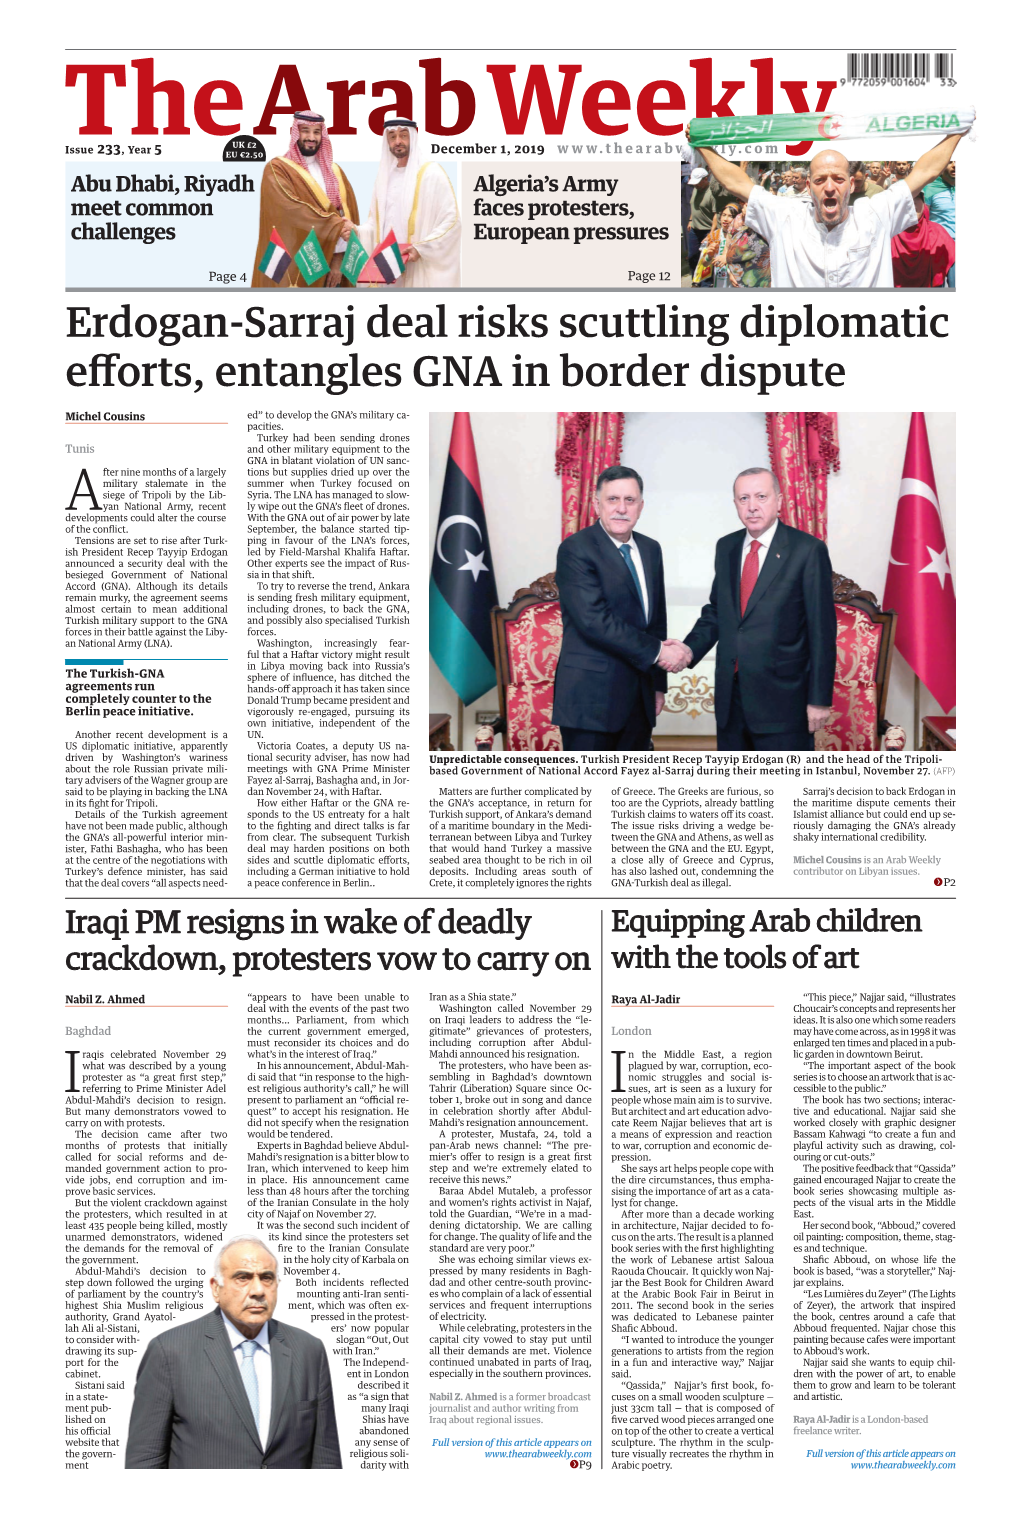 Erdogan-Sarraj Deal Risks Scuttling Diplomatic Efforts, Entangles GNA in Border Dispute